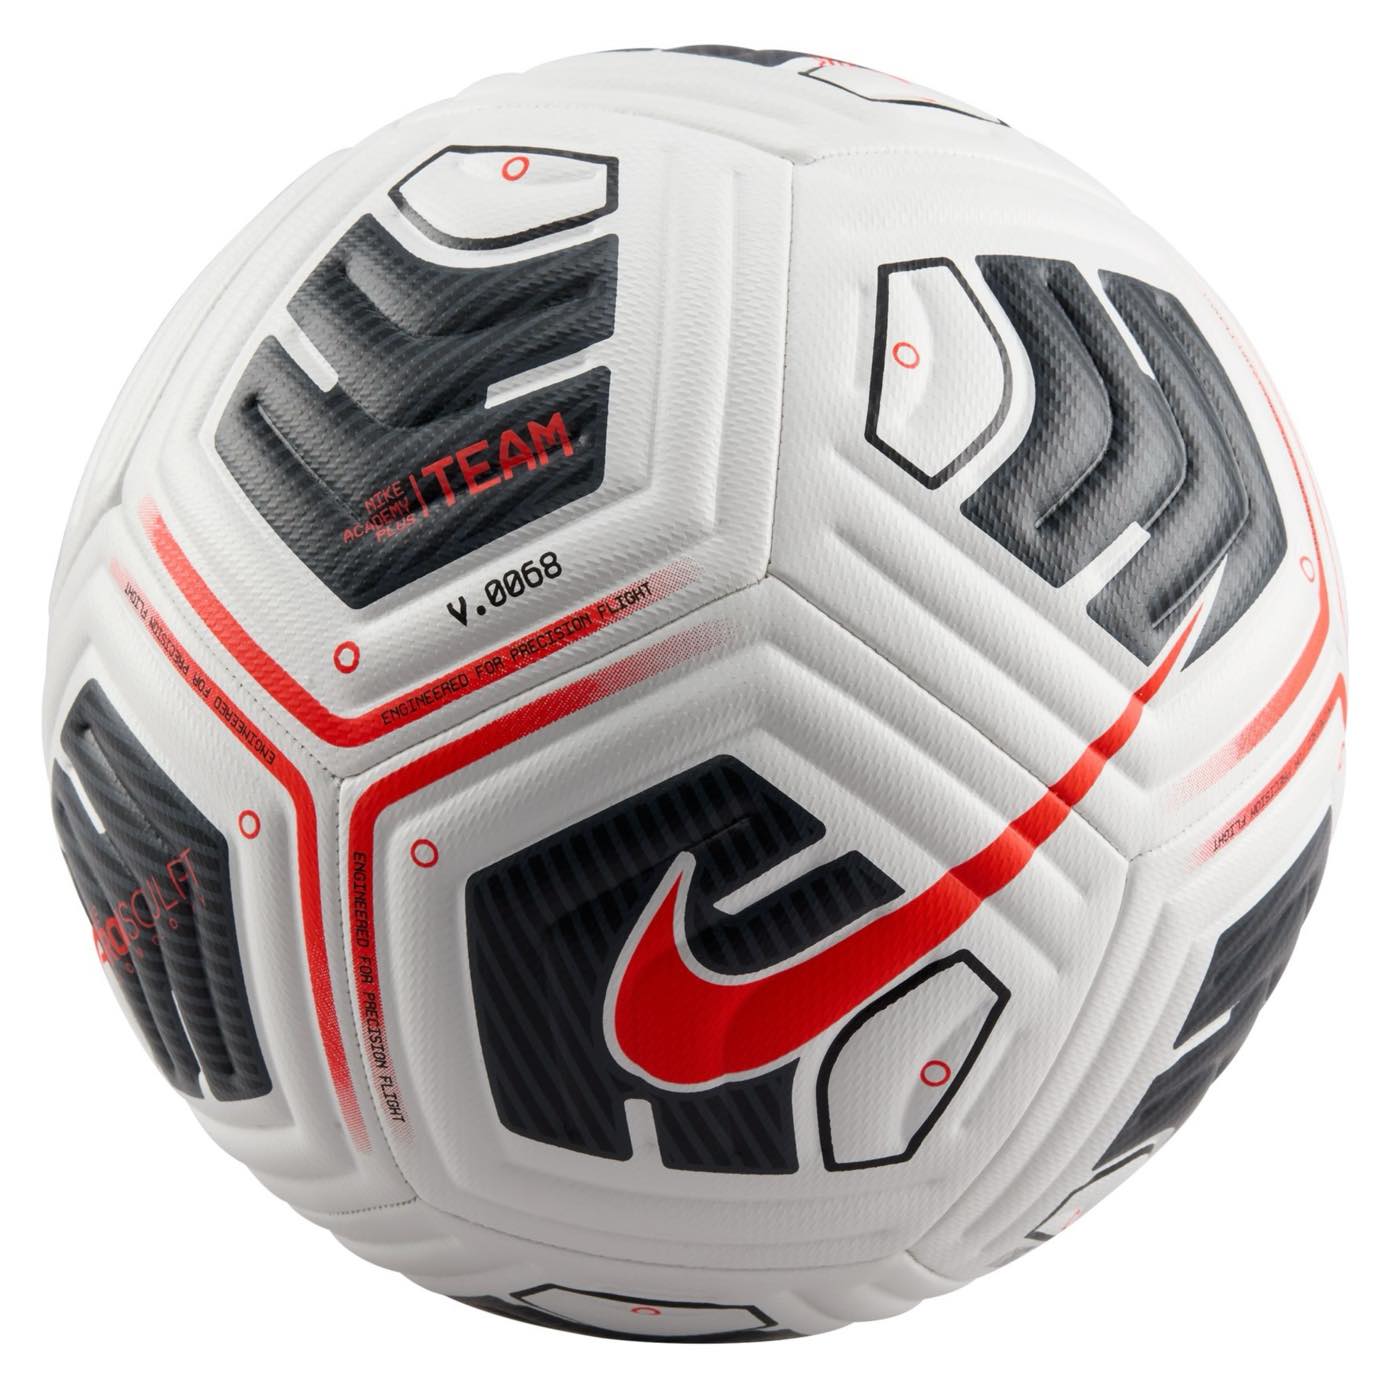 Nike Academy Plus Soccer Ball with Aerowsculpt Technology